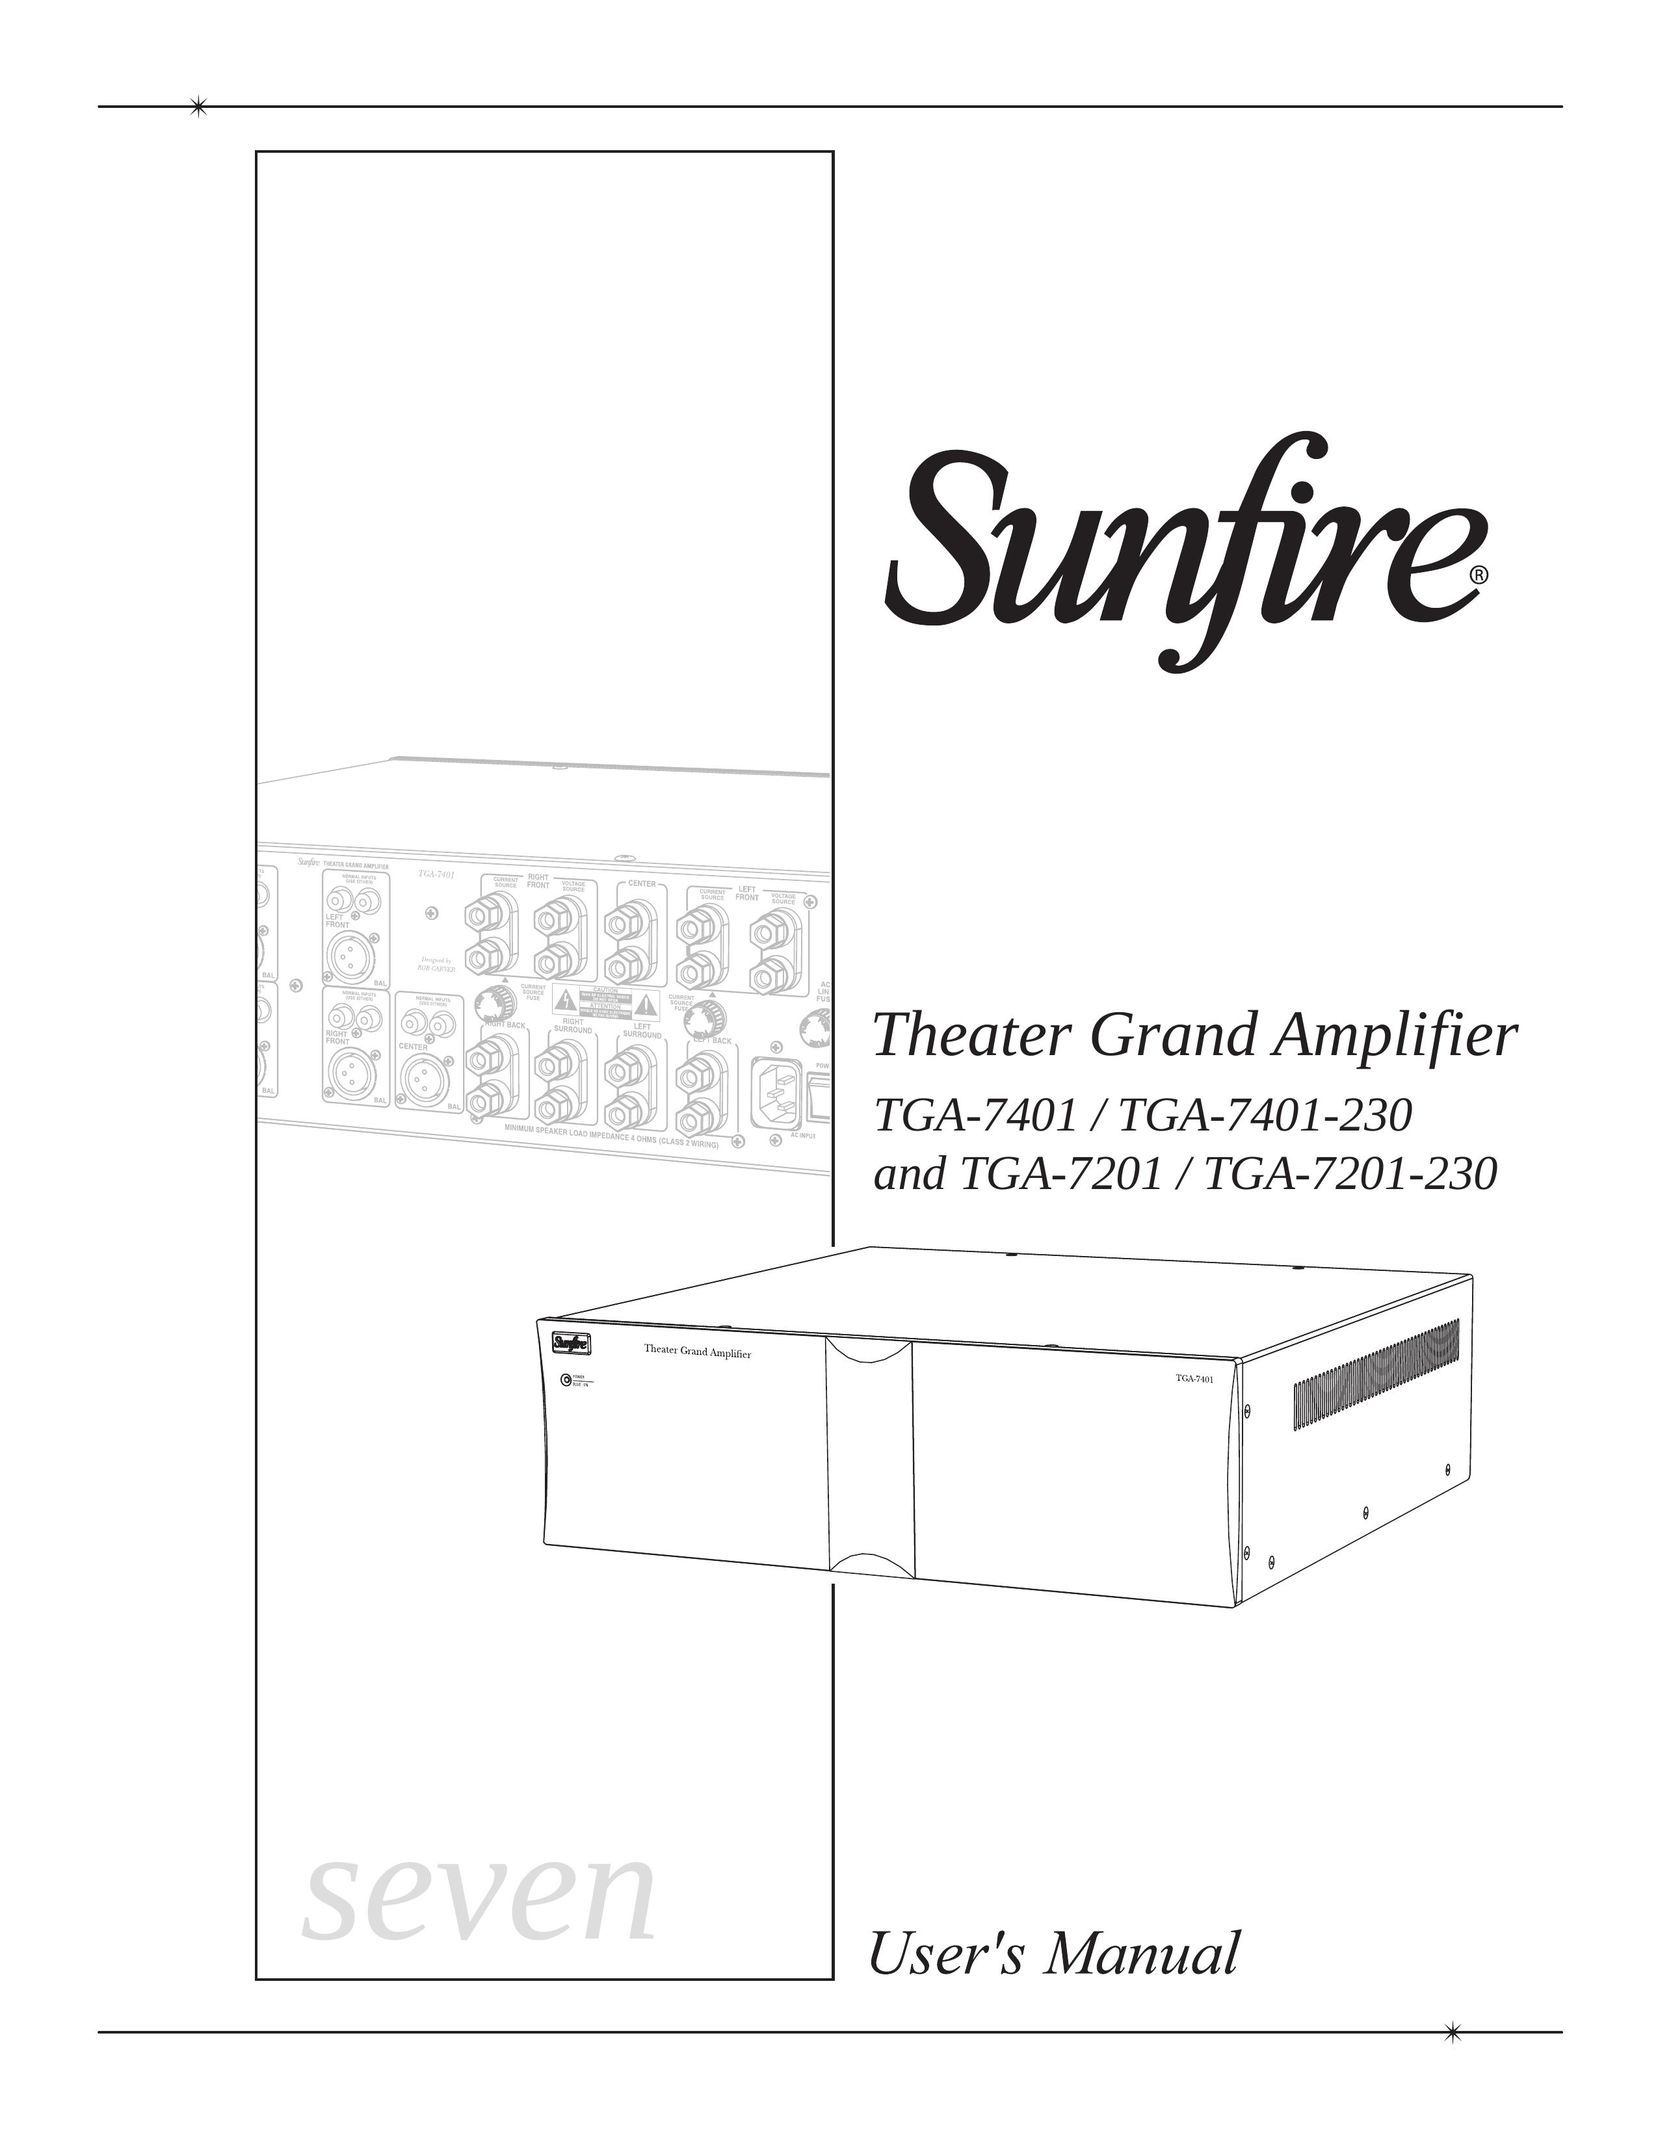 Sunfire TGA-7201 Stereo Amplifier User Manual